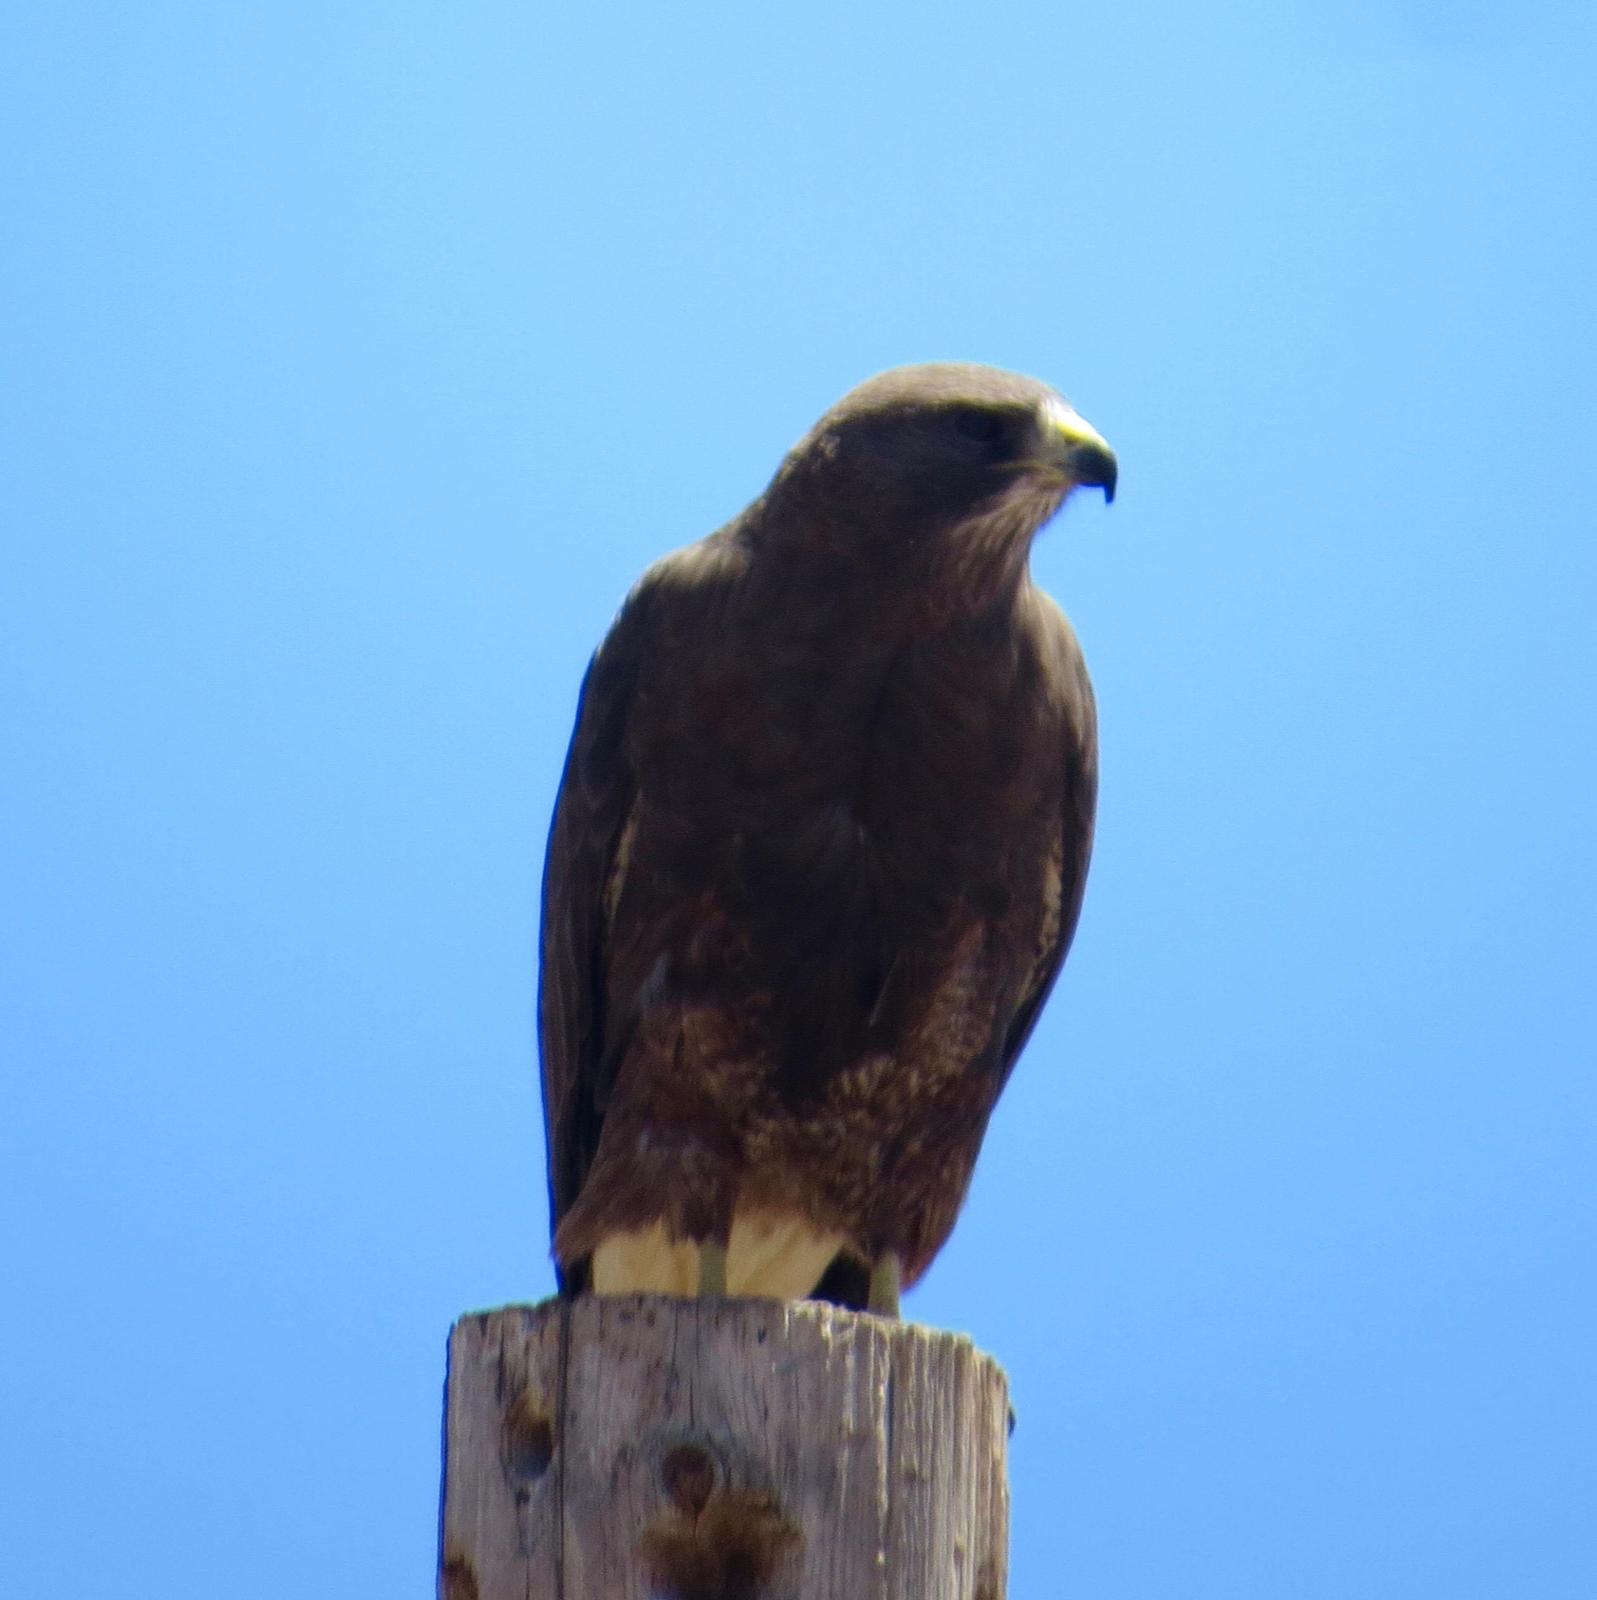 Swainson's Hawk Photo by Don Glasco